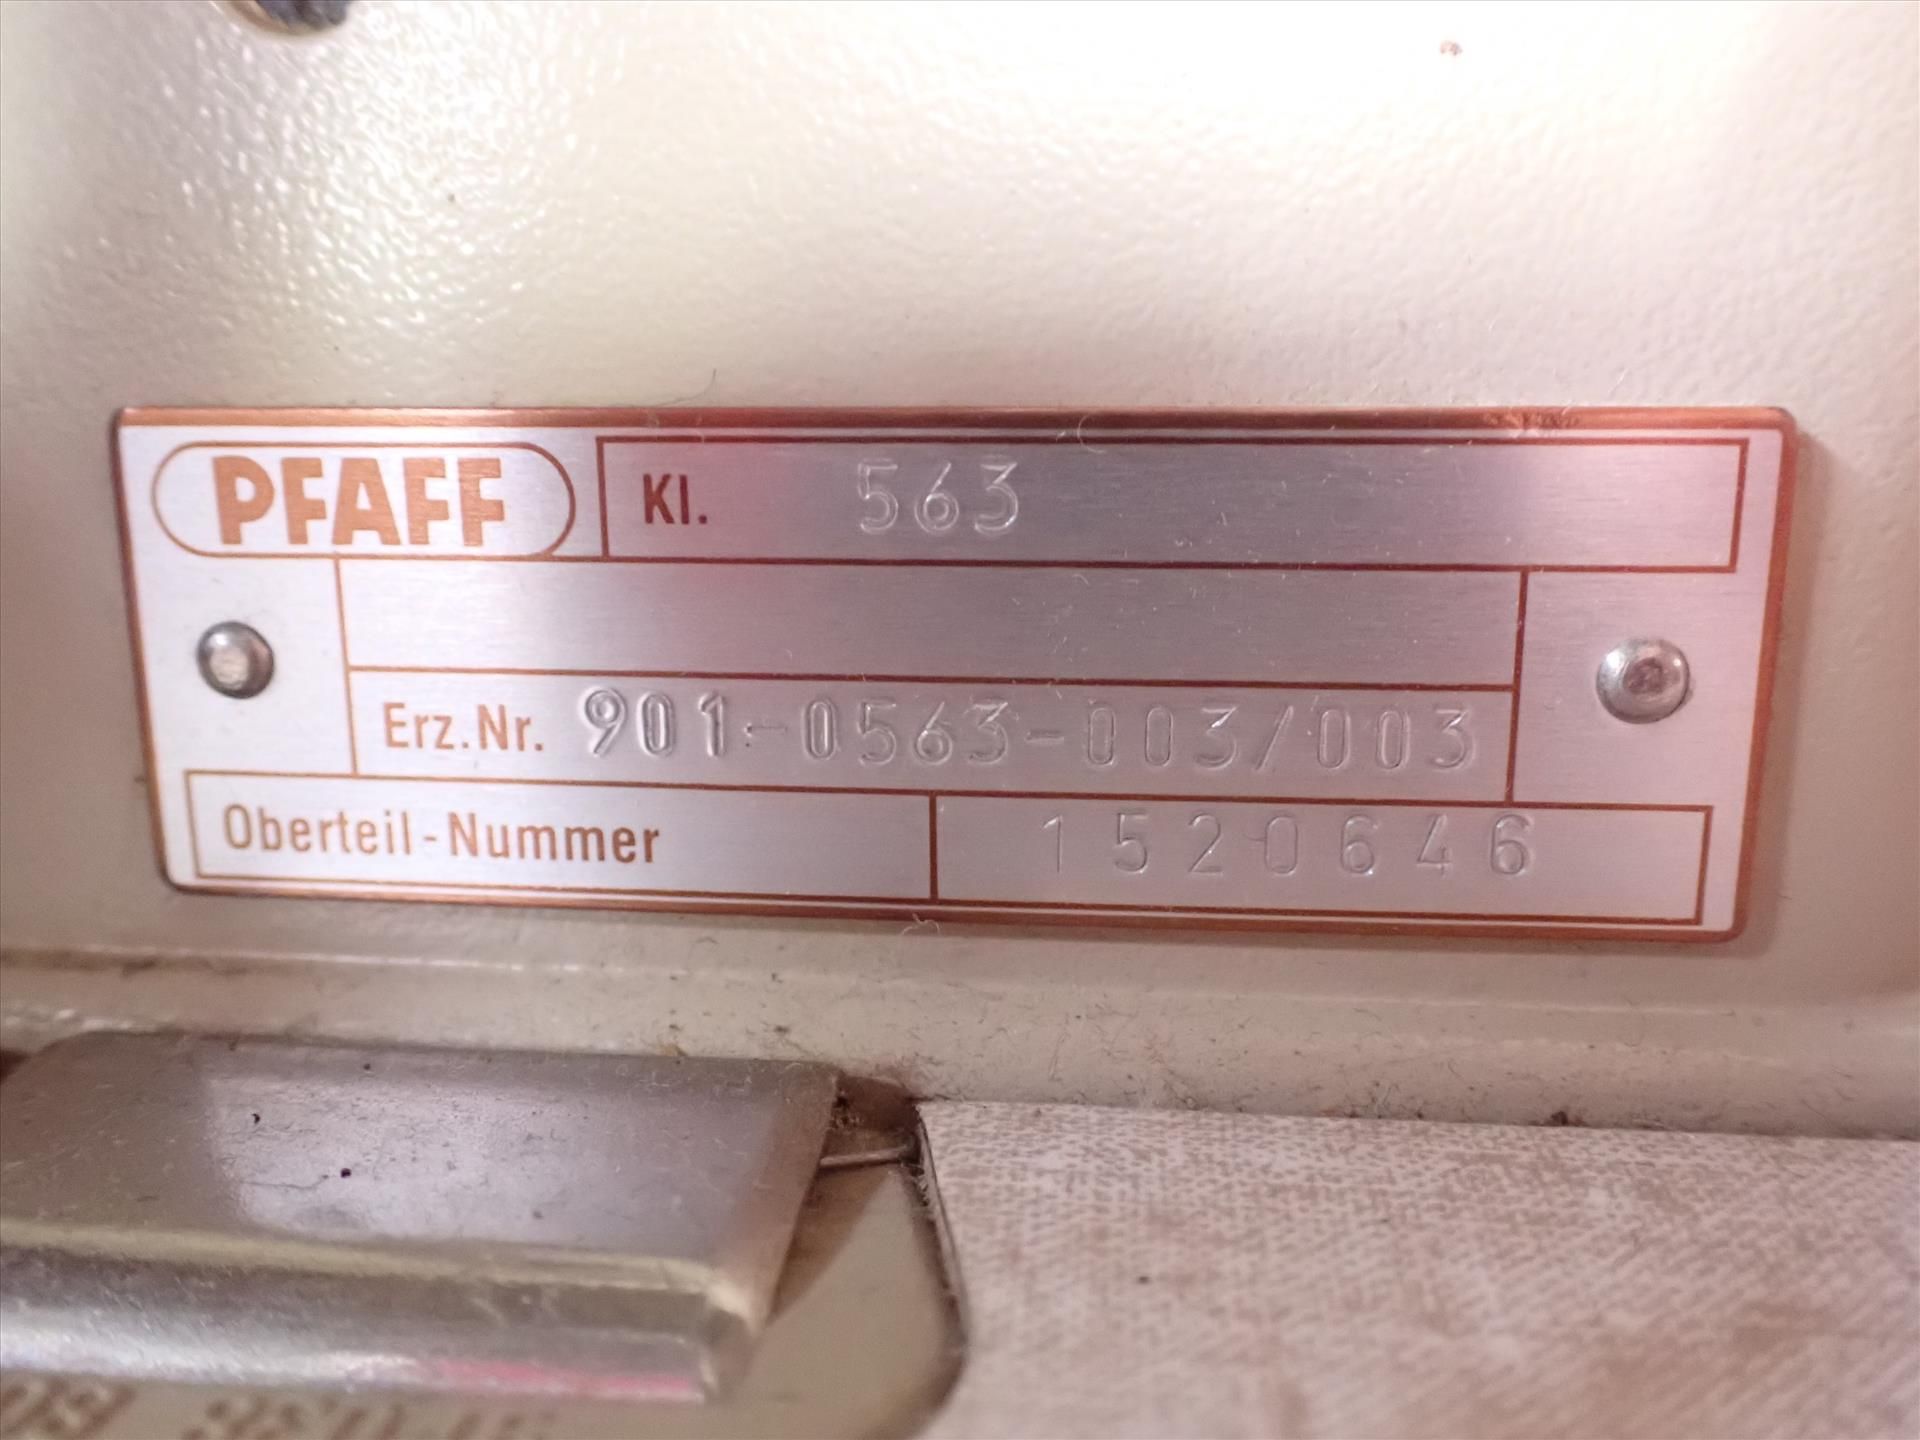 Pfaff '563' industrial sewing machine, mod. 901-0563-003/005, S/N 1520646, 10 in. throat, 1/2 hp c/w - Image 4 of 6